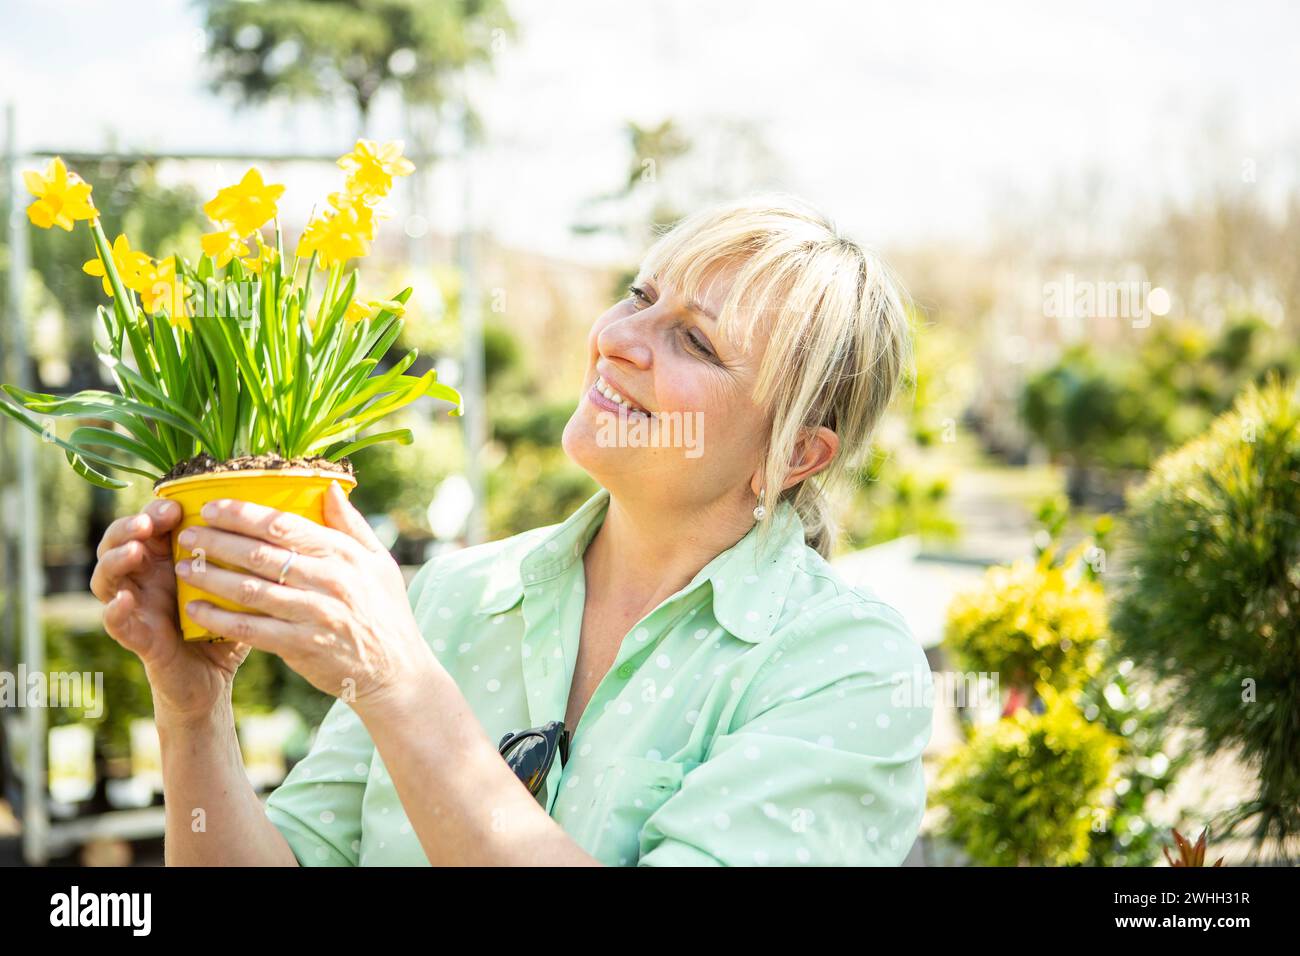 Gardener with daffodils Stock Photo